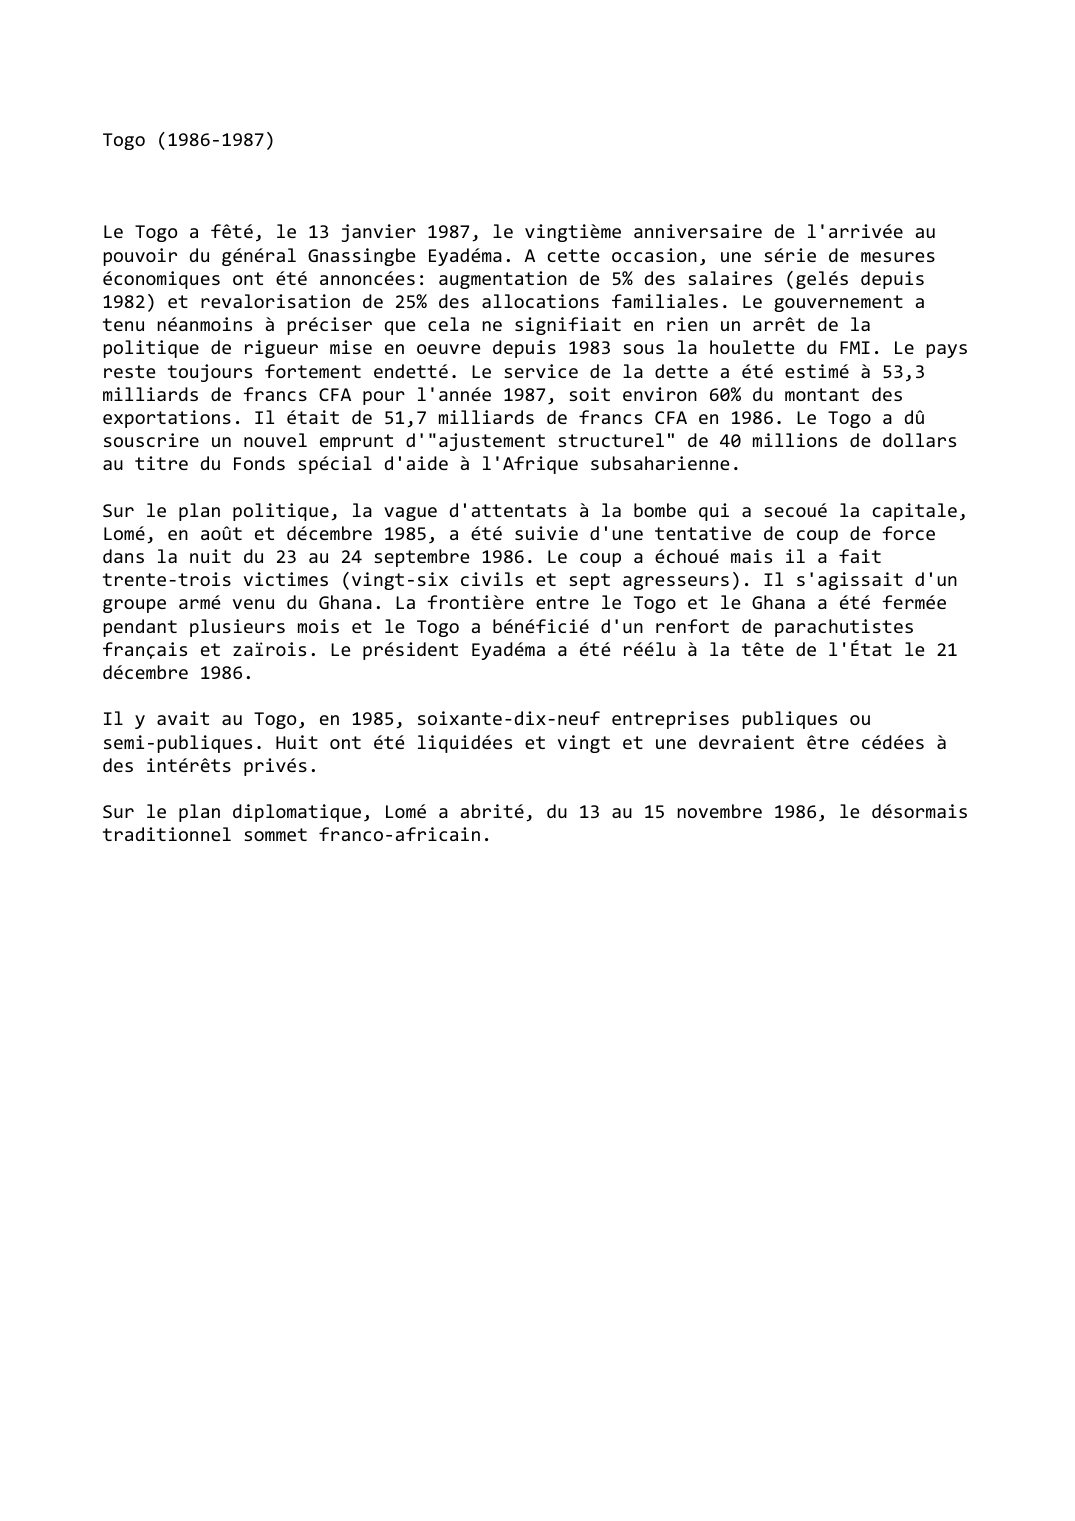 Prévisualisation du document Togo (1986-1987)